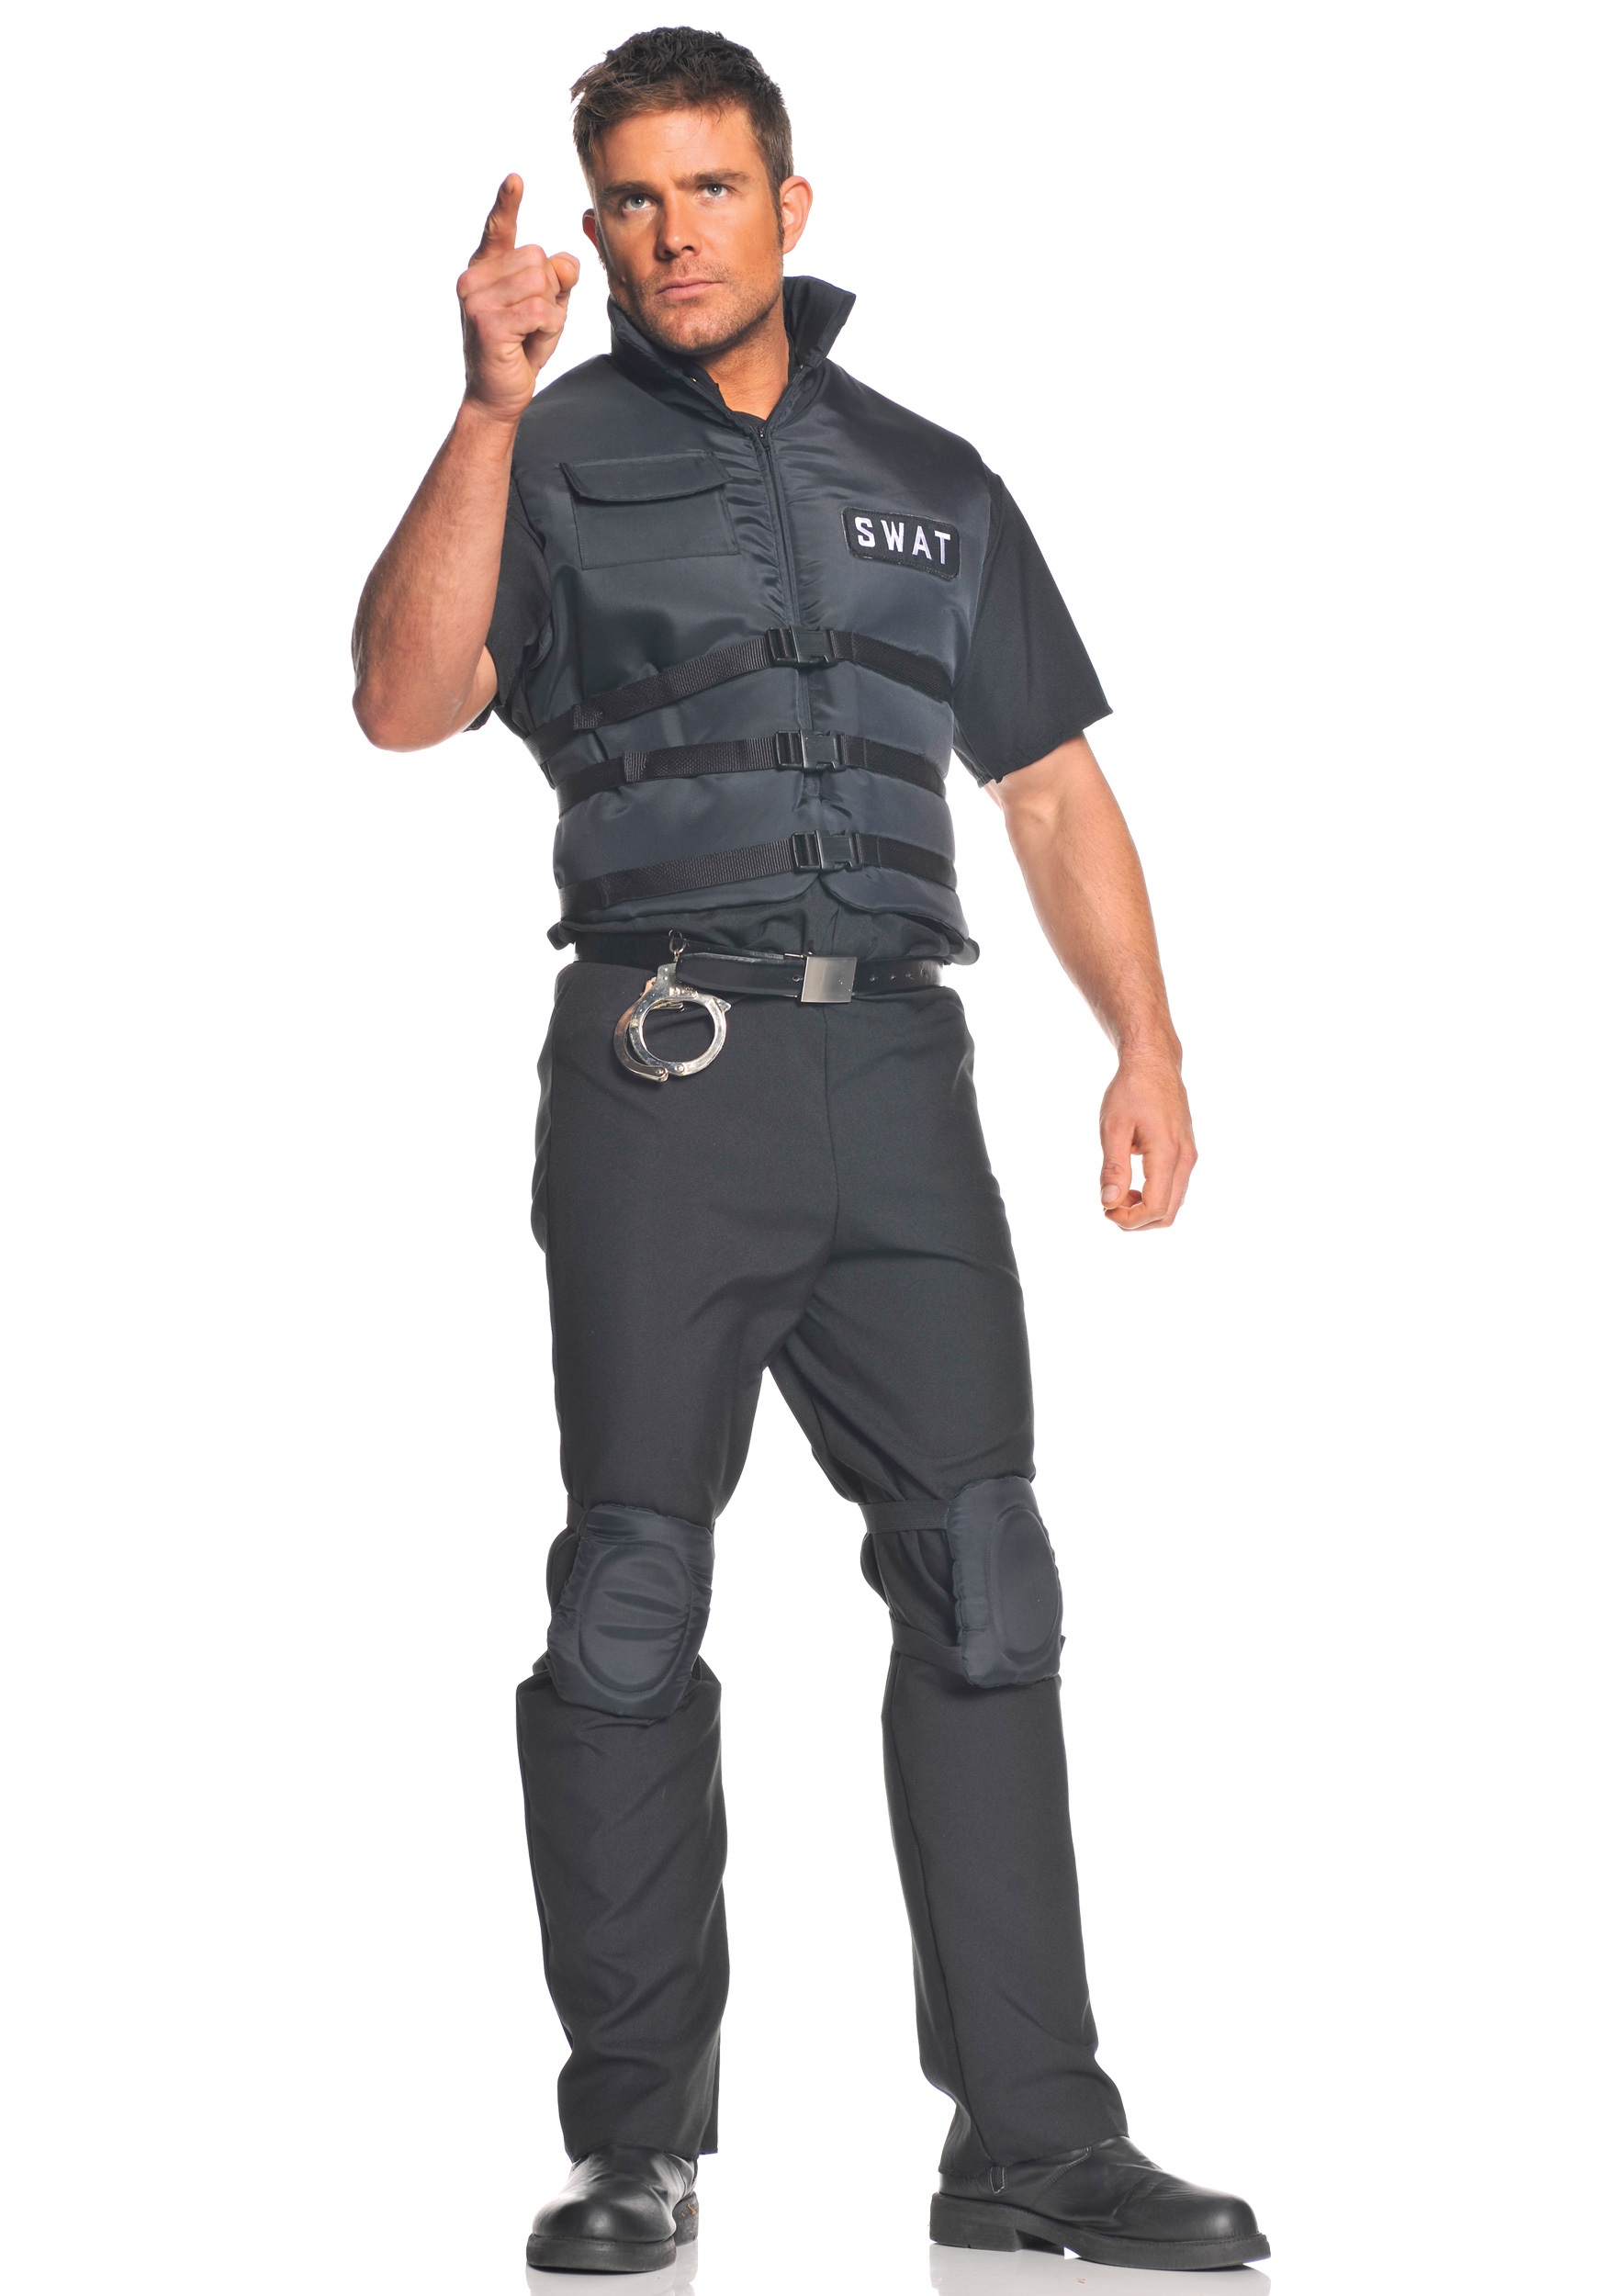 Plus Size Swat Officer Costume Halloween Costume Ideas 2019 5700